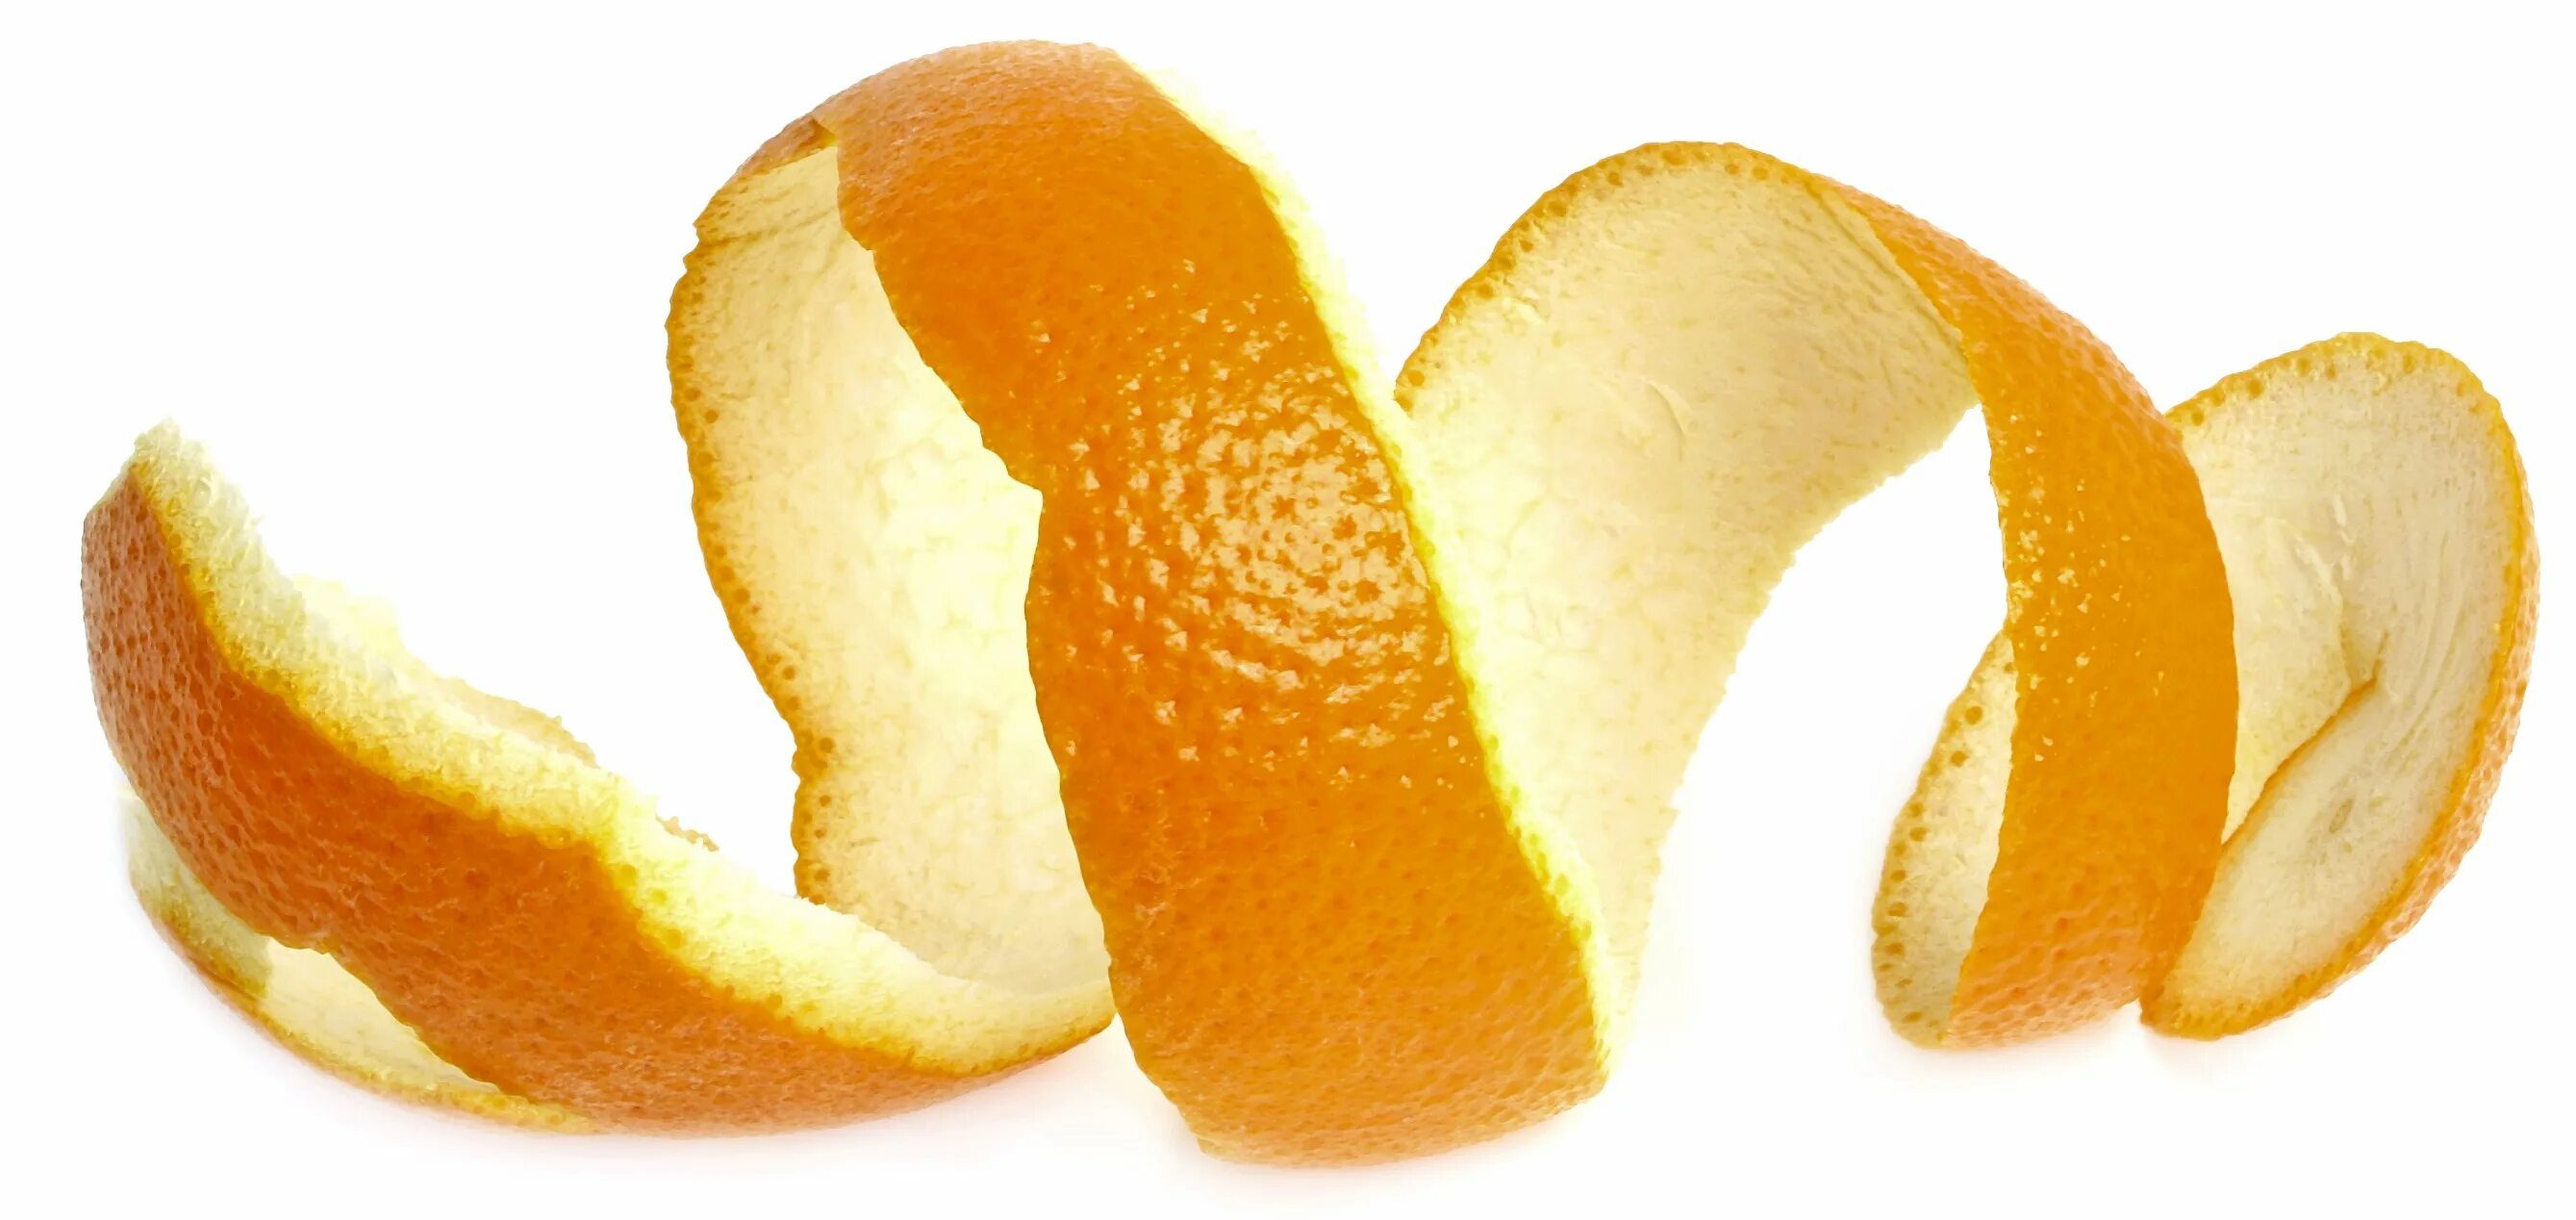 6 кожура. Кожура апельсина. Апельсиновая корка. Шкурка апельсина. Цедра цитрусовых.